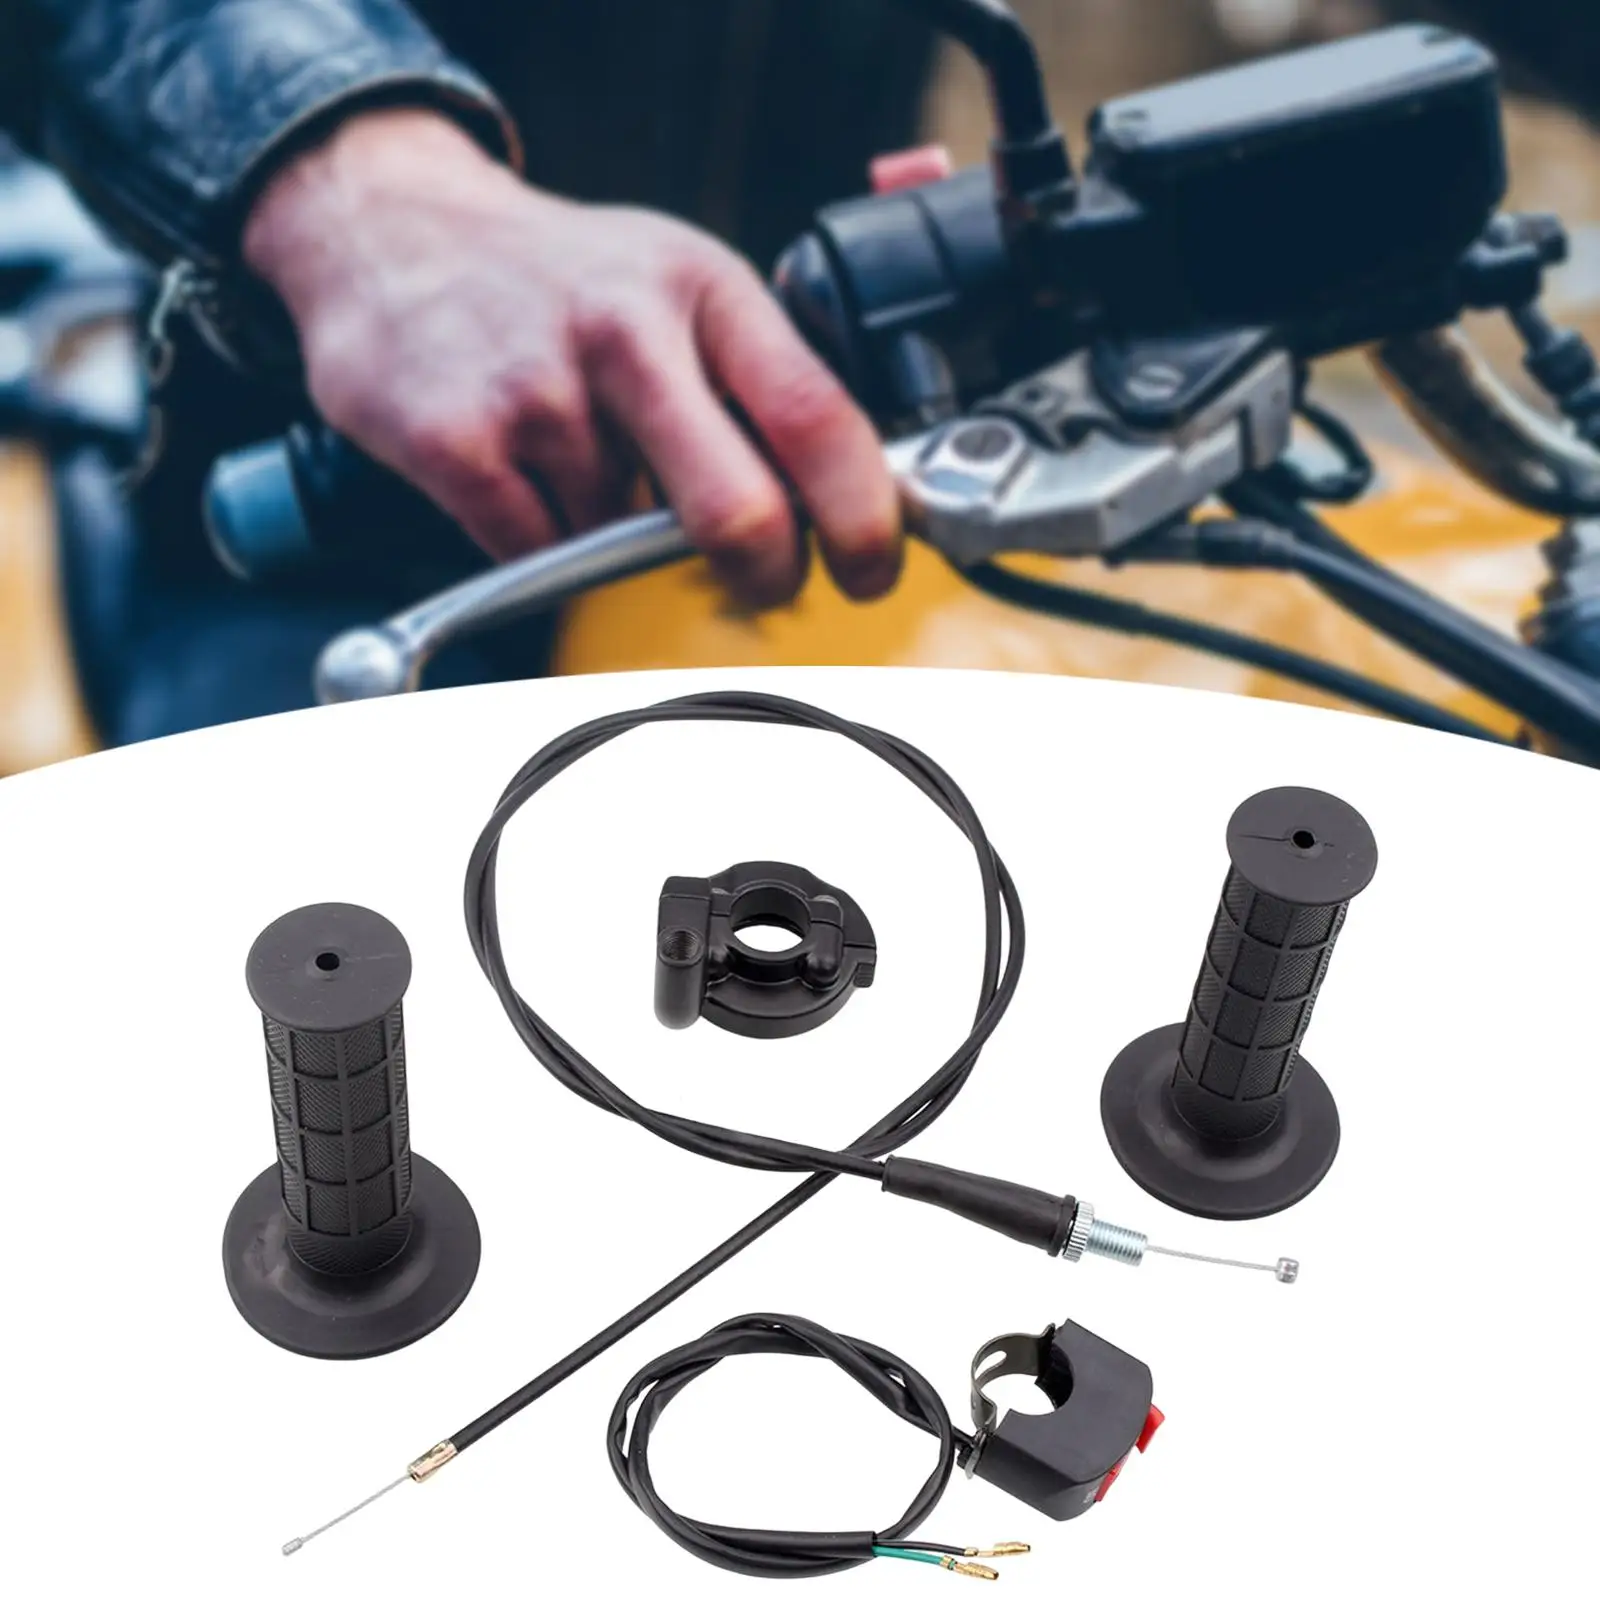 Throttle Accelerator Handle and Cable Kit for 50cc Mini Bike 150cc 250cc